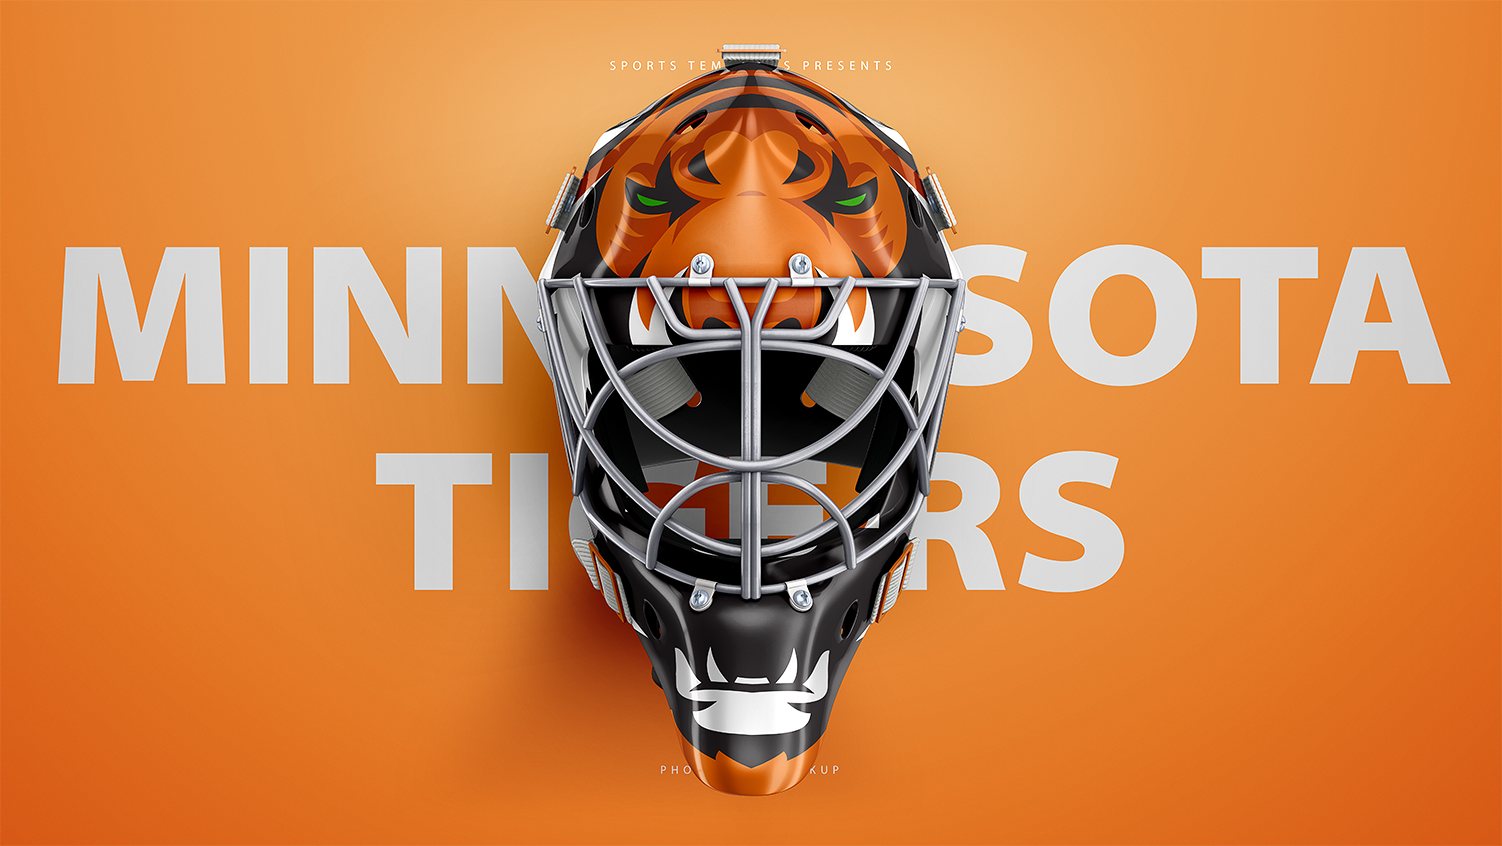 Download Hockey Goalie Mask PSD mockup template by Ali Rahmoun on Dribbble